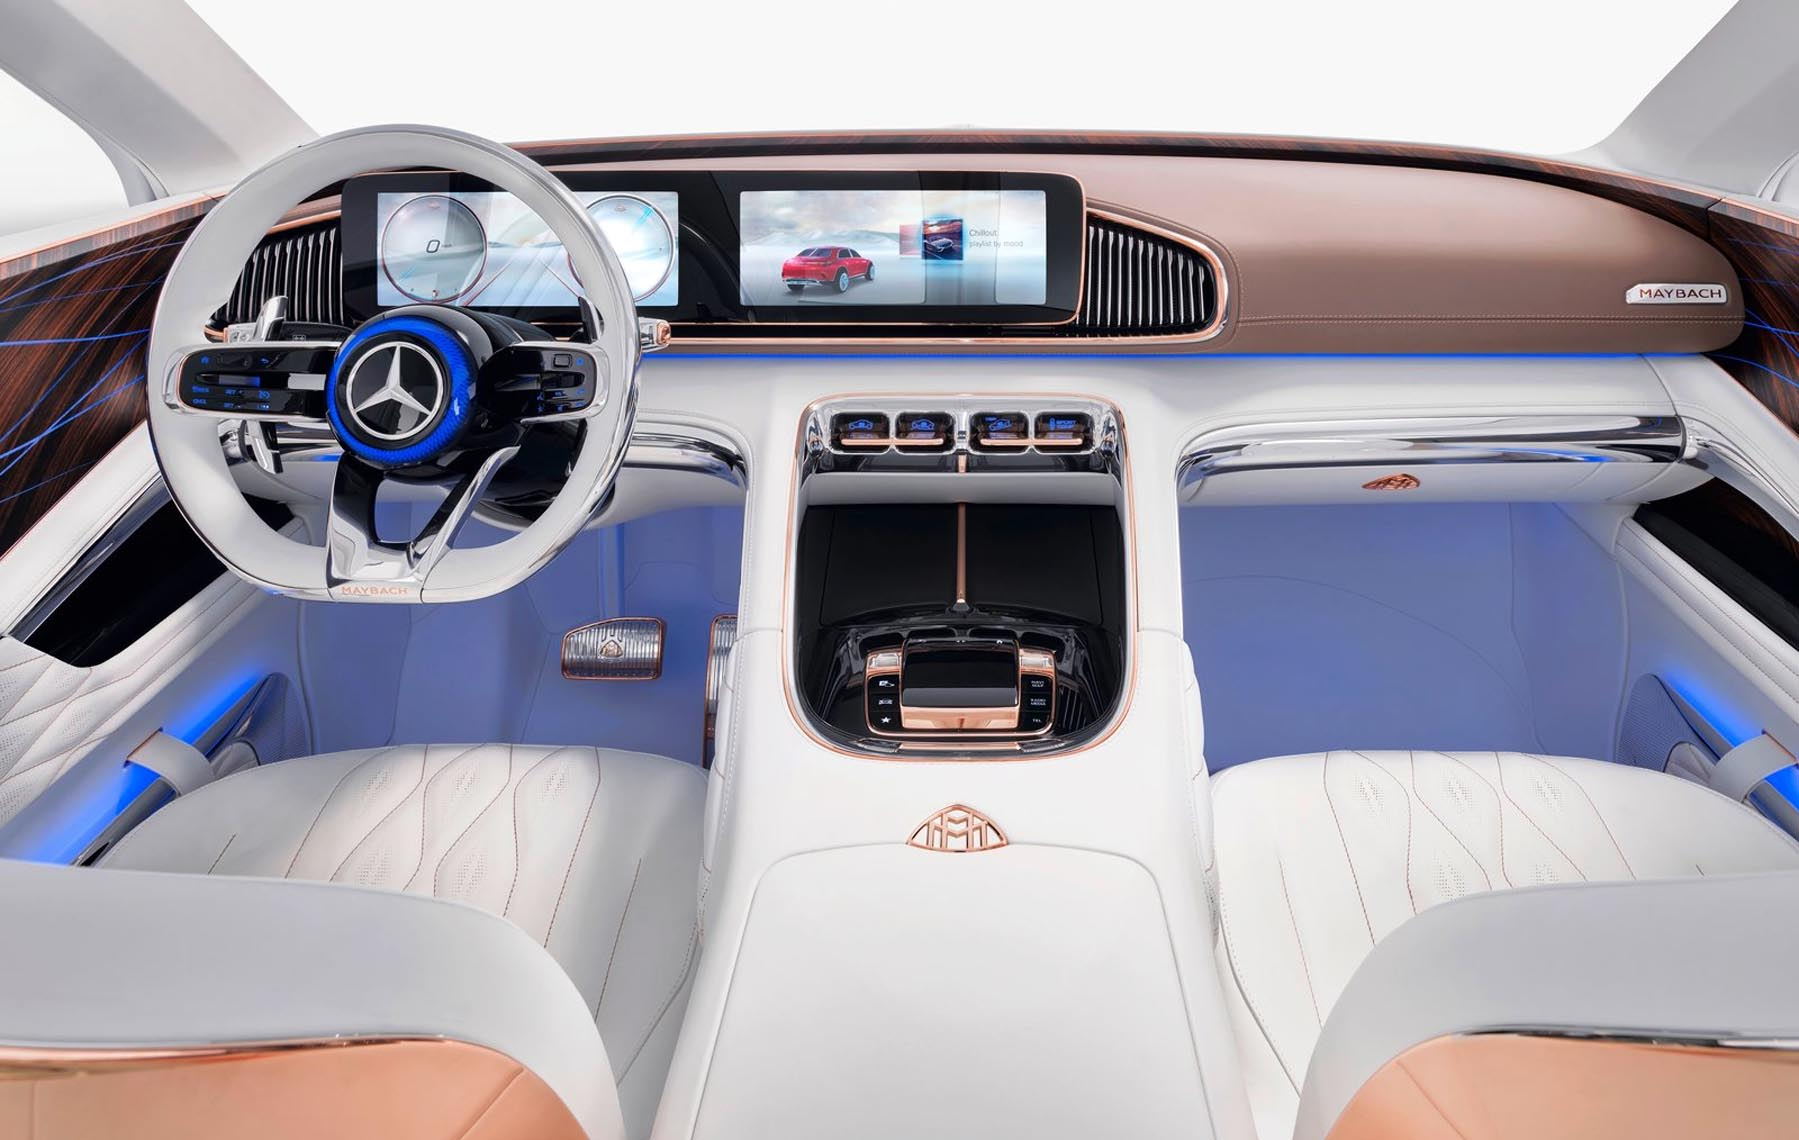 Ultimate luxury. W223 Maybach салон. Mercedes w223 Maybach салон. W223 Maybach Interior. Mercedes-Maybach Vision 6 Interior.